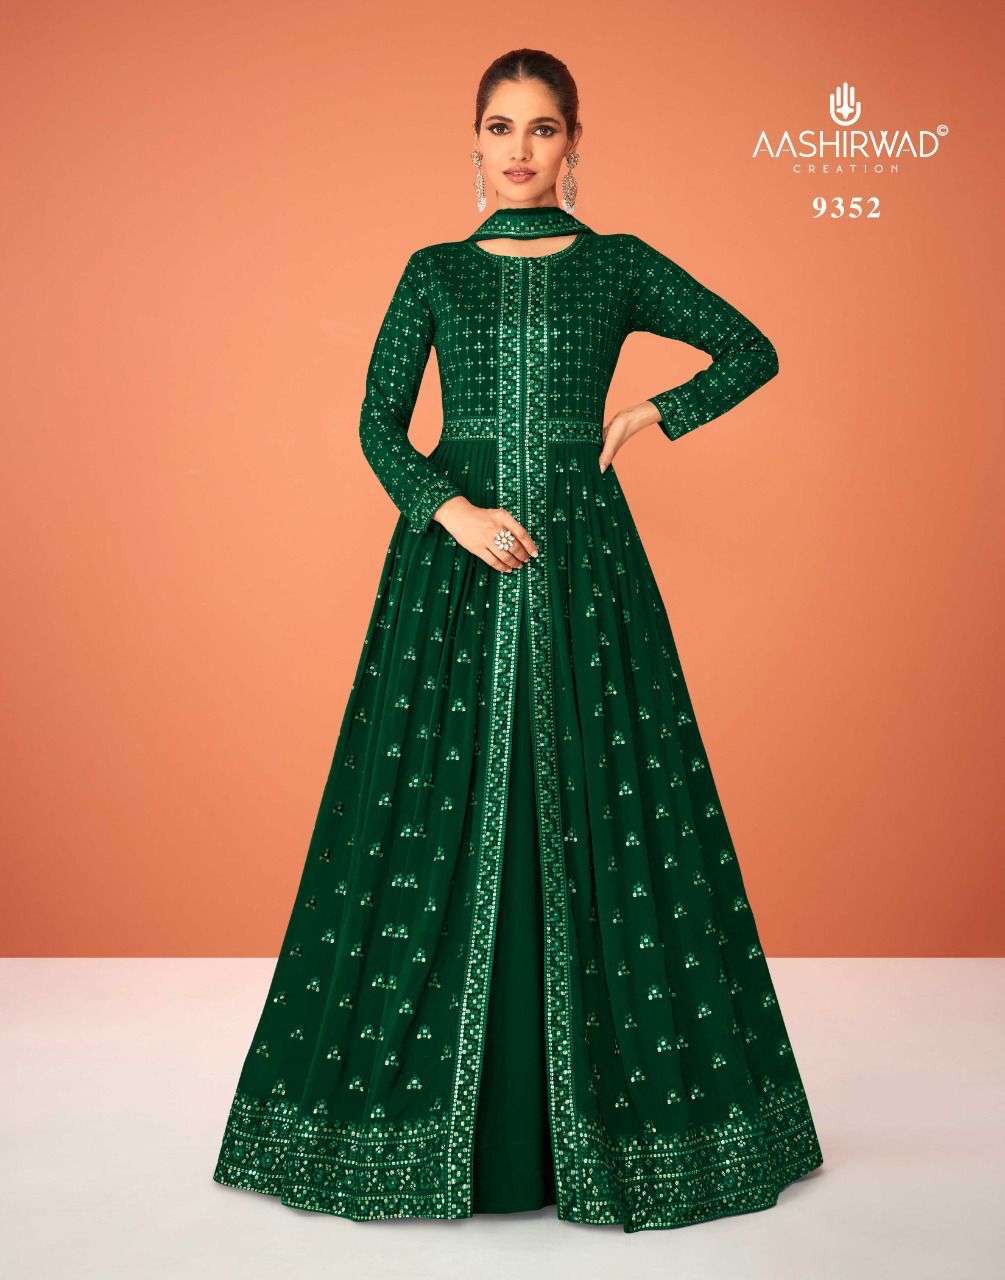 Kasturi By Gulkand Designer Wholesale Online Salwar Suit Set